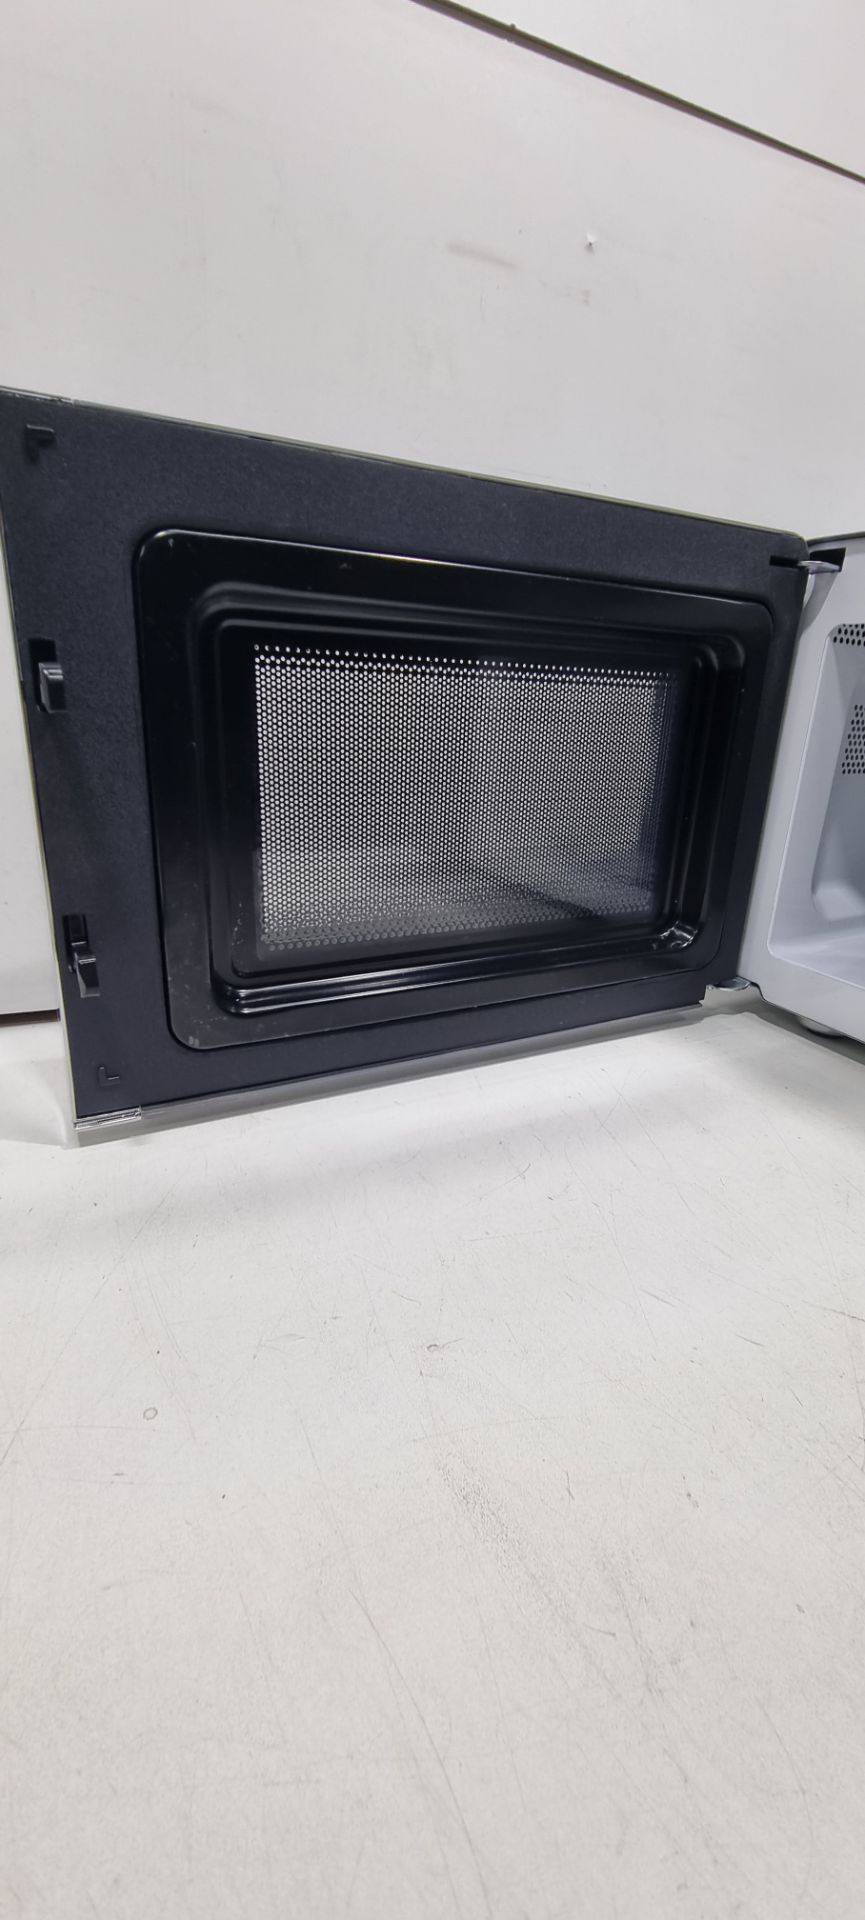 Wilko 700-800 W Microwave Oven - Image 4 of 5